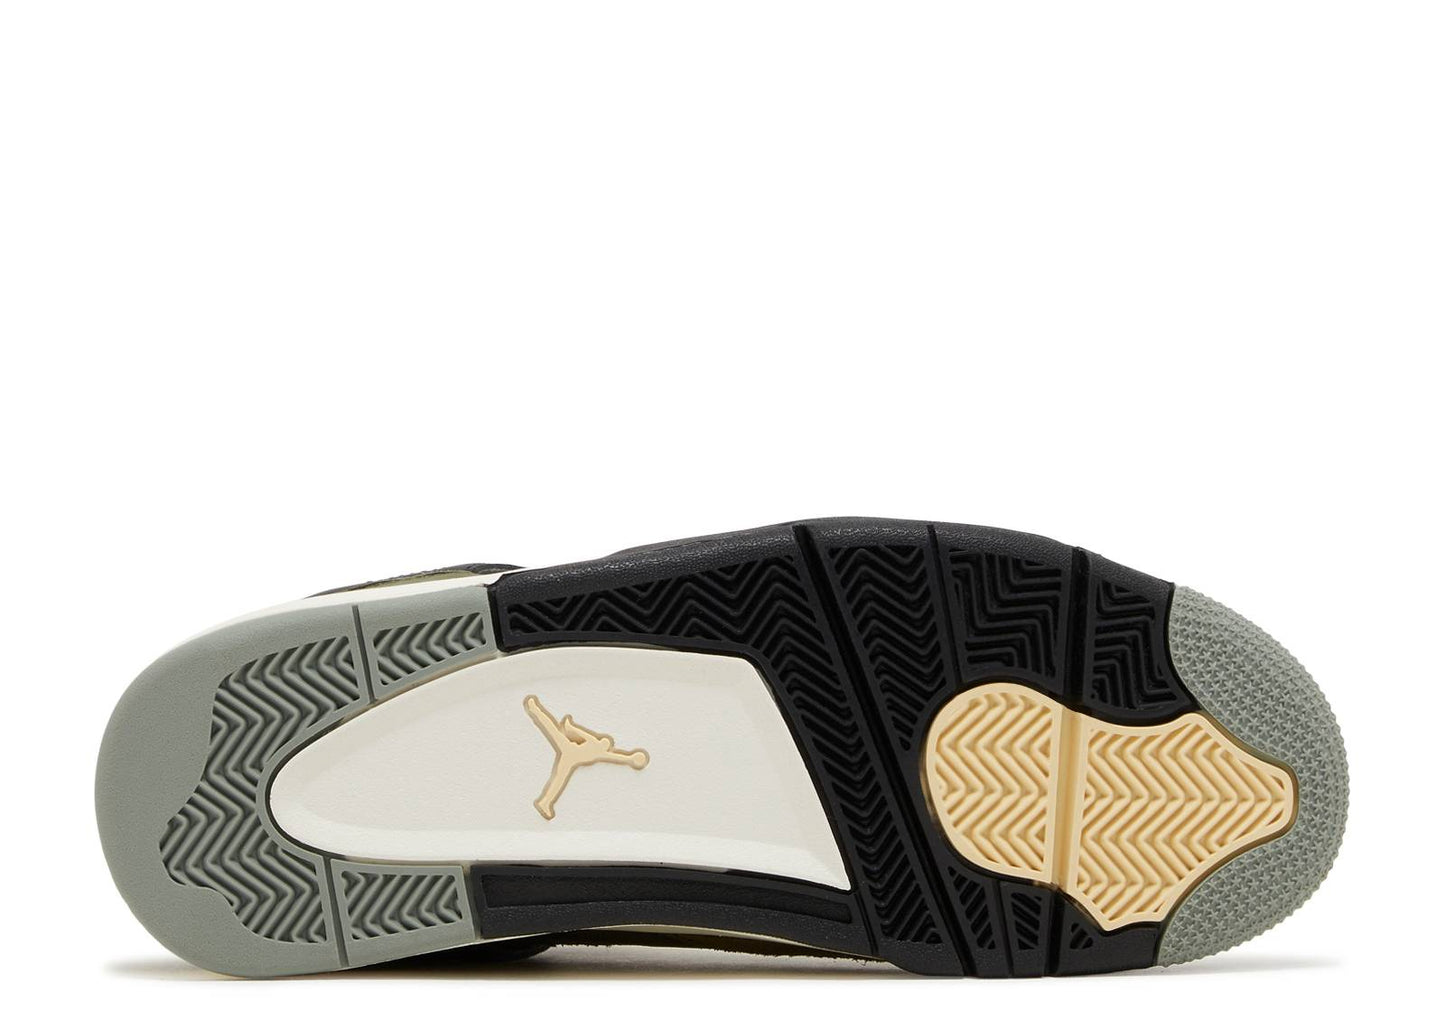 Air Jordan 4 SE “Olive”